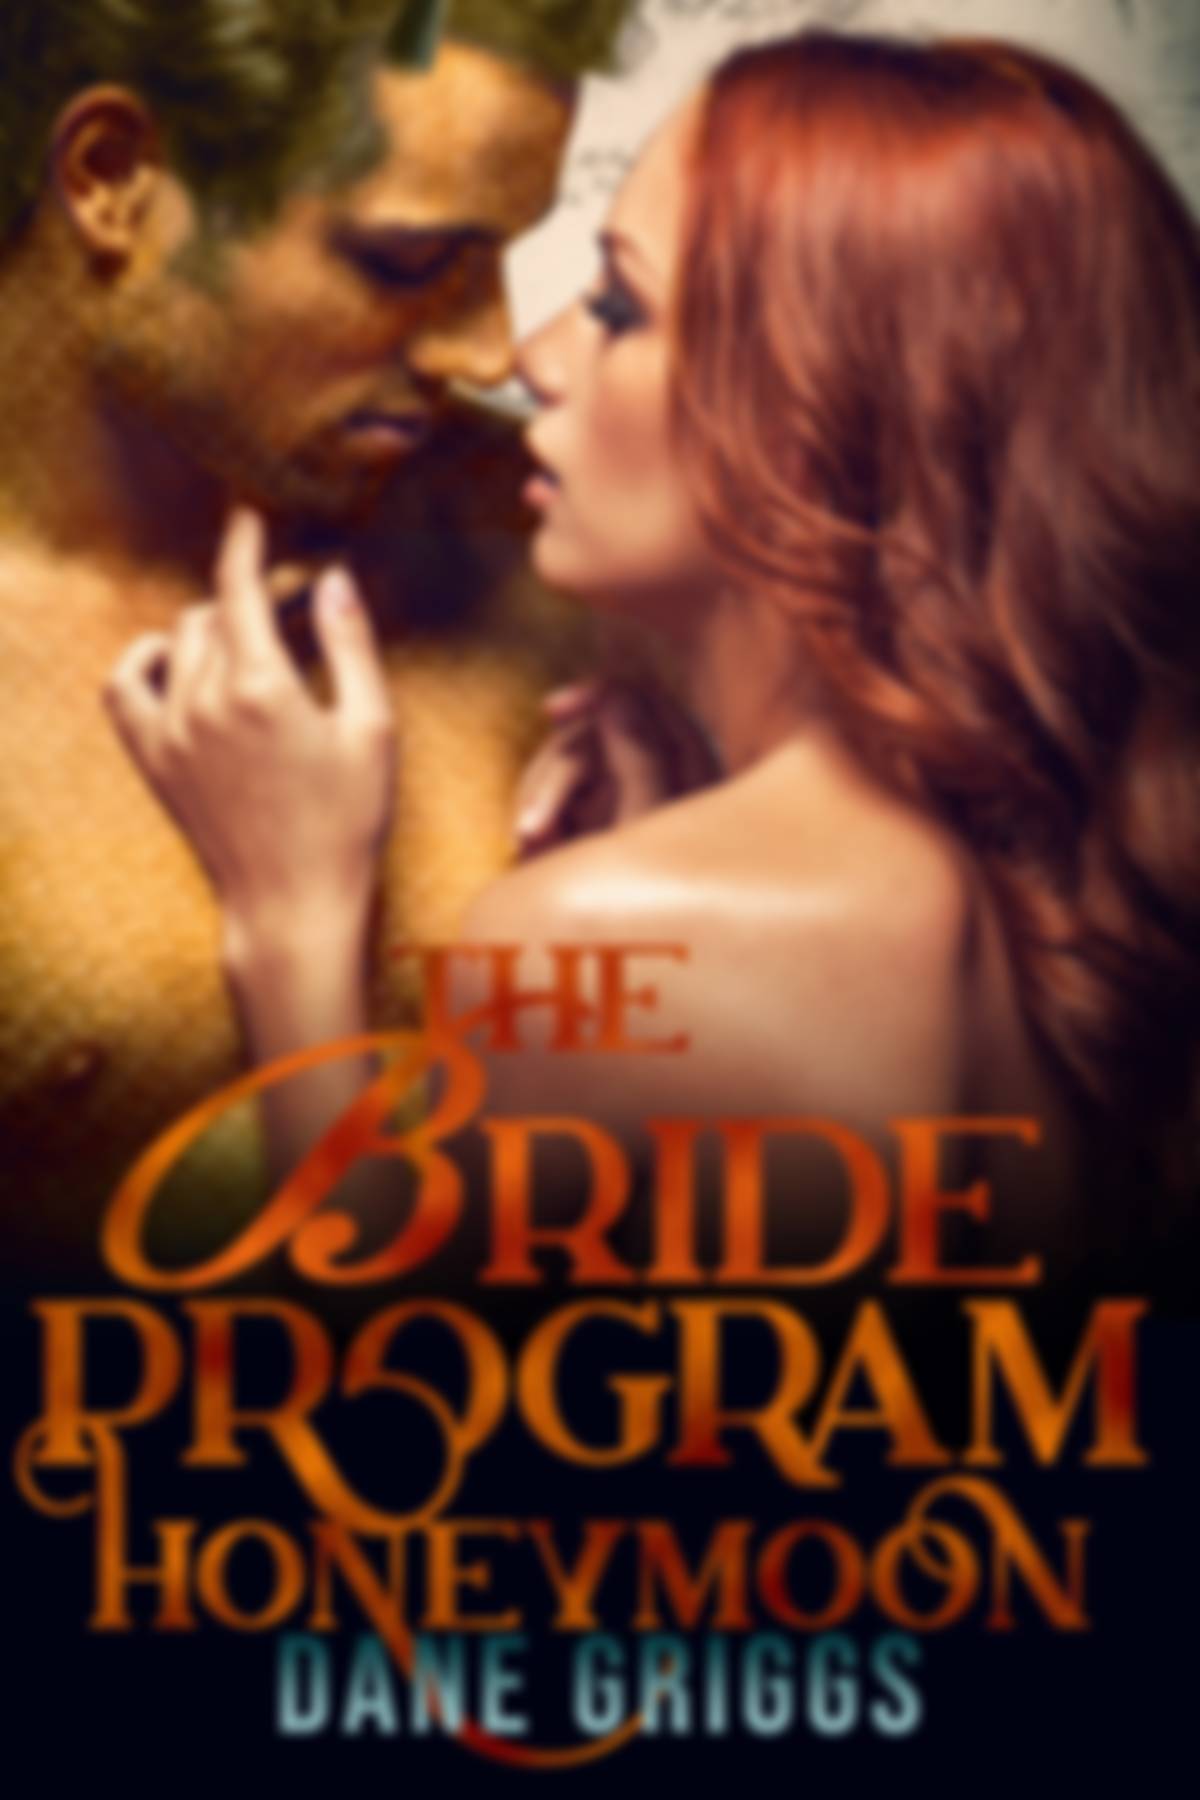 The Bride Program Honeymoon book cover